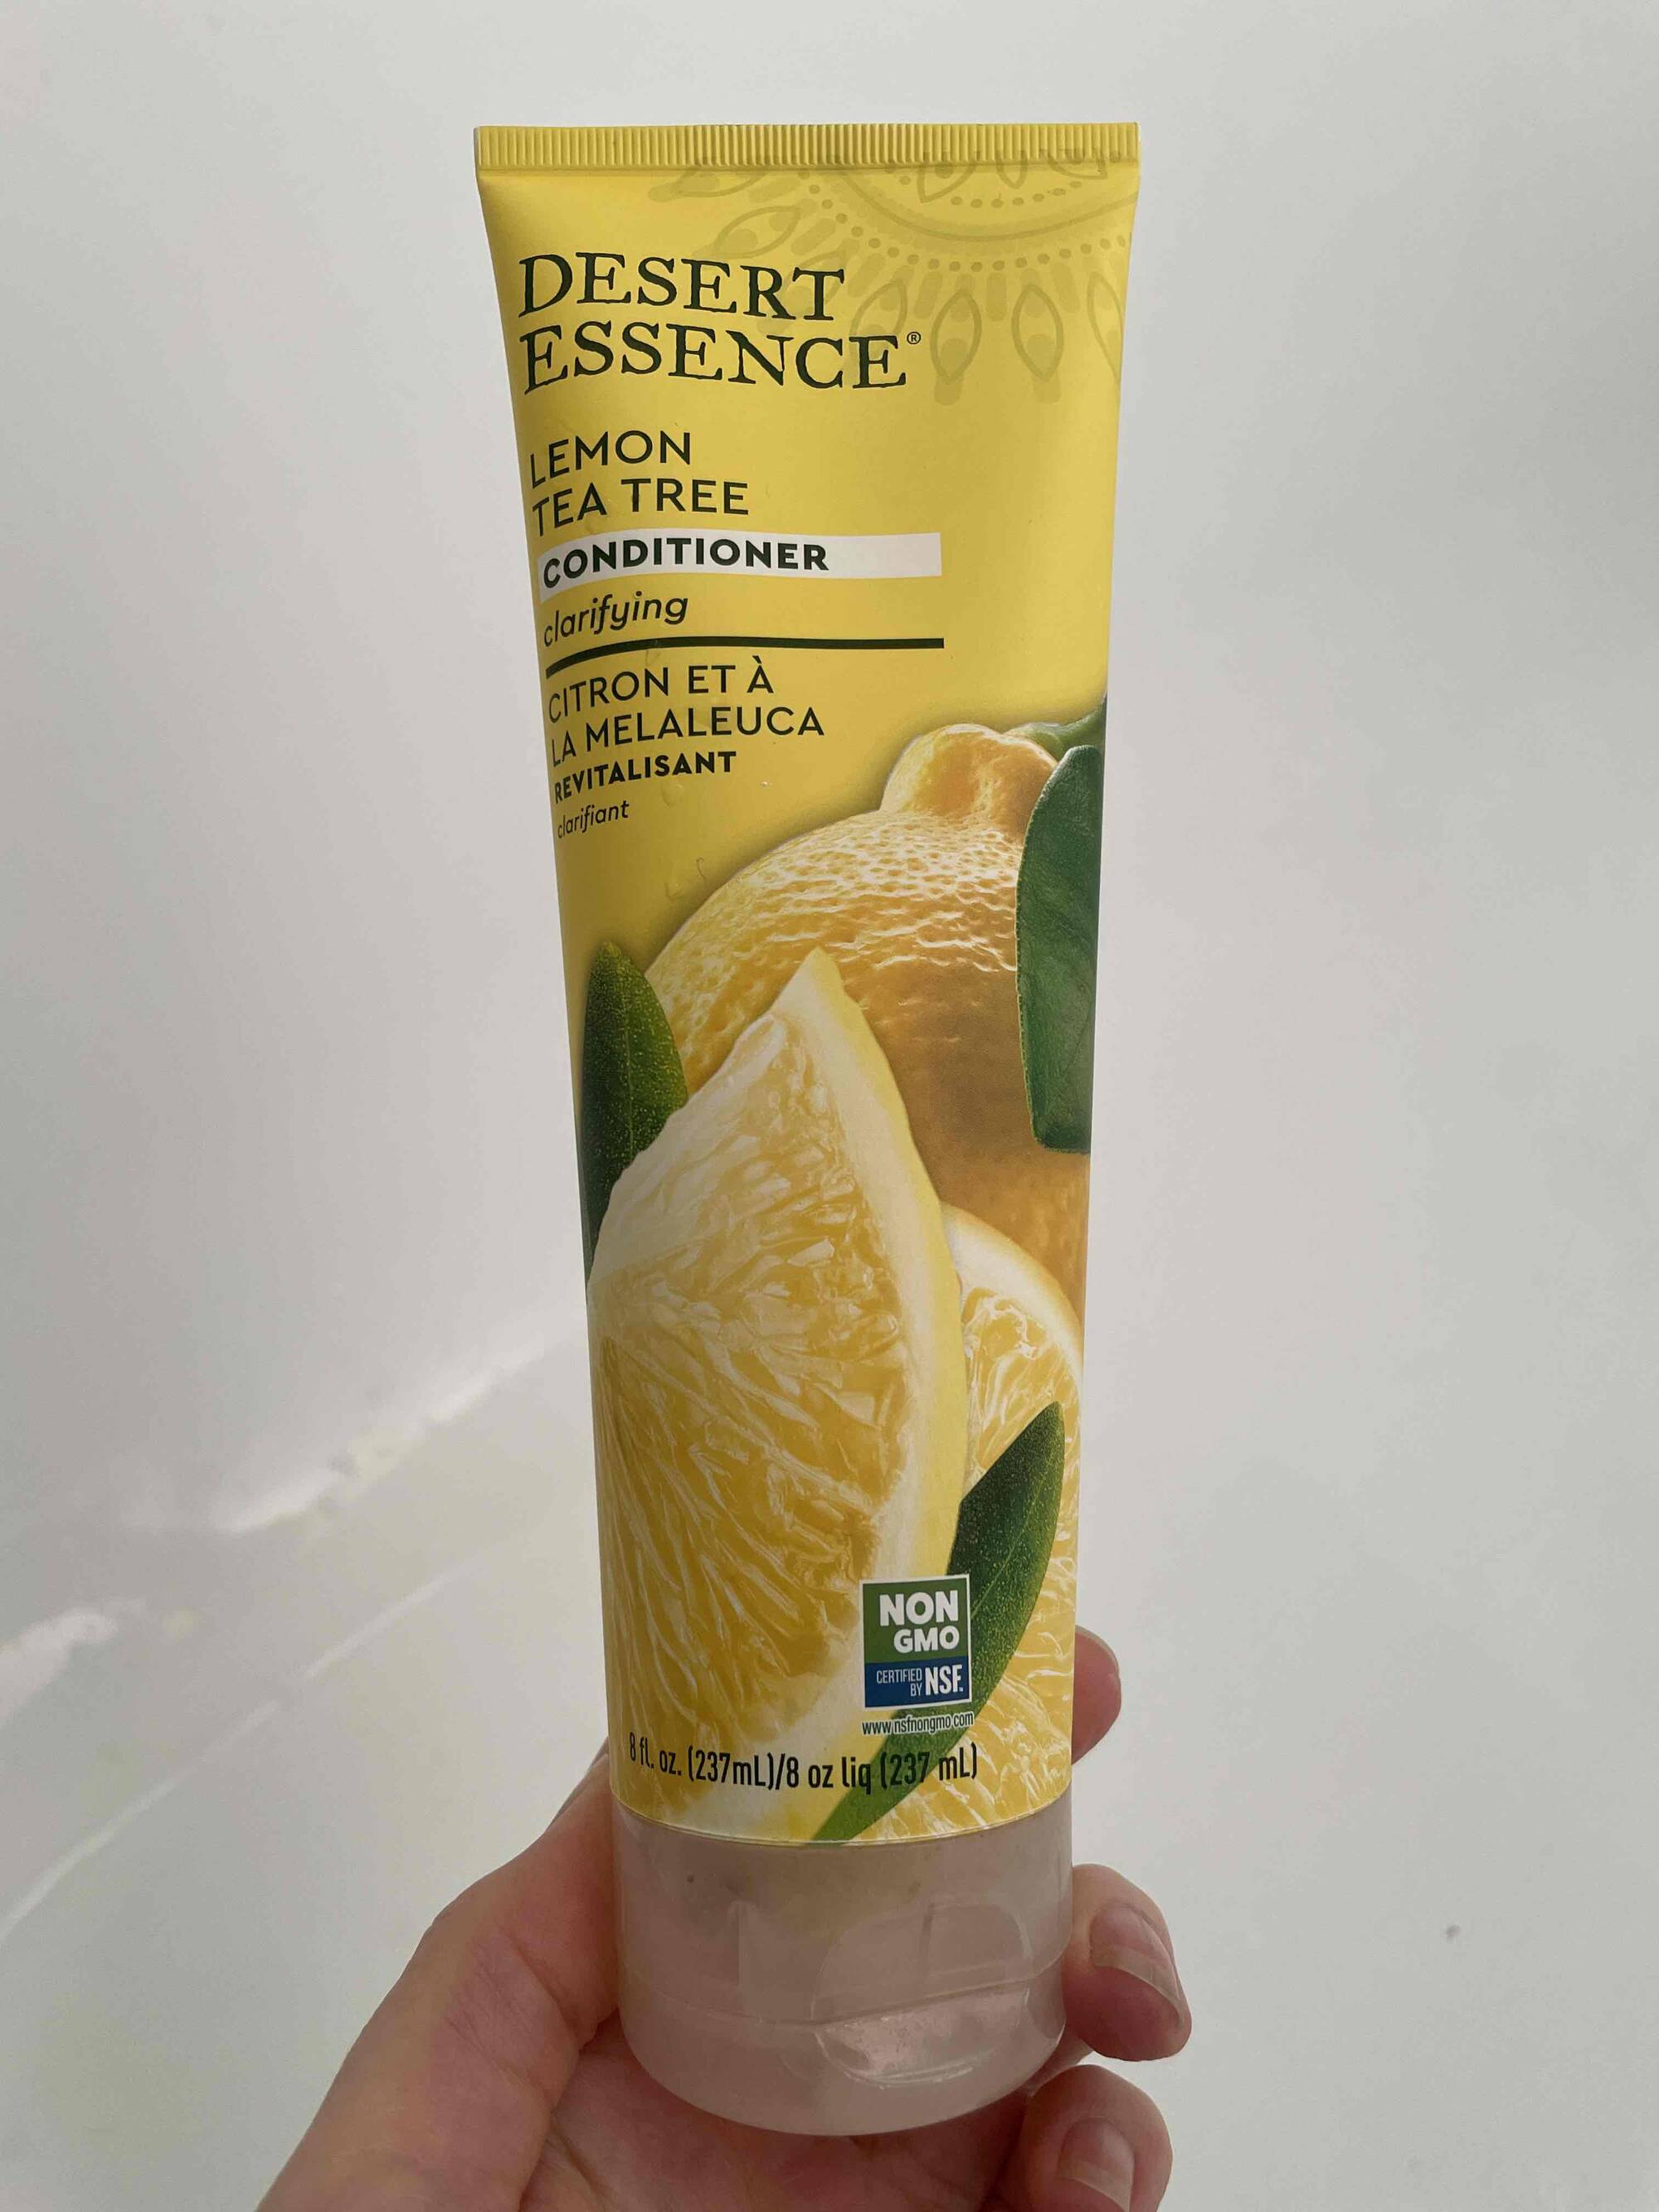 DESERT ESSENCE - Lemon tea tree - Conditioner